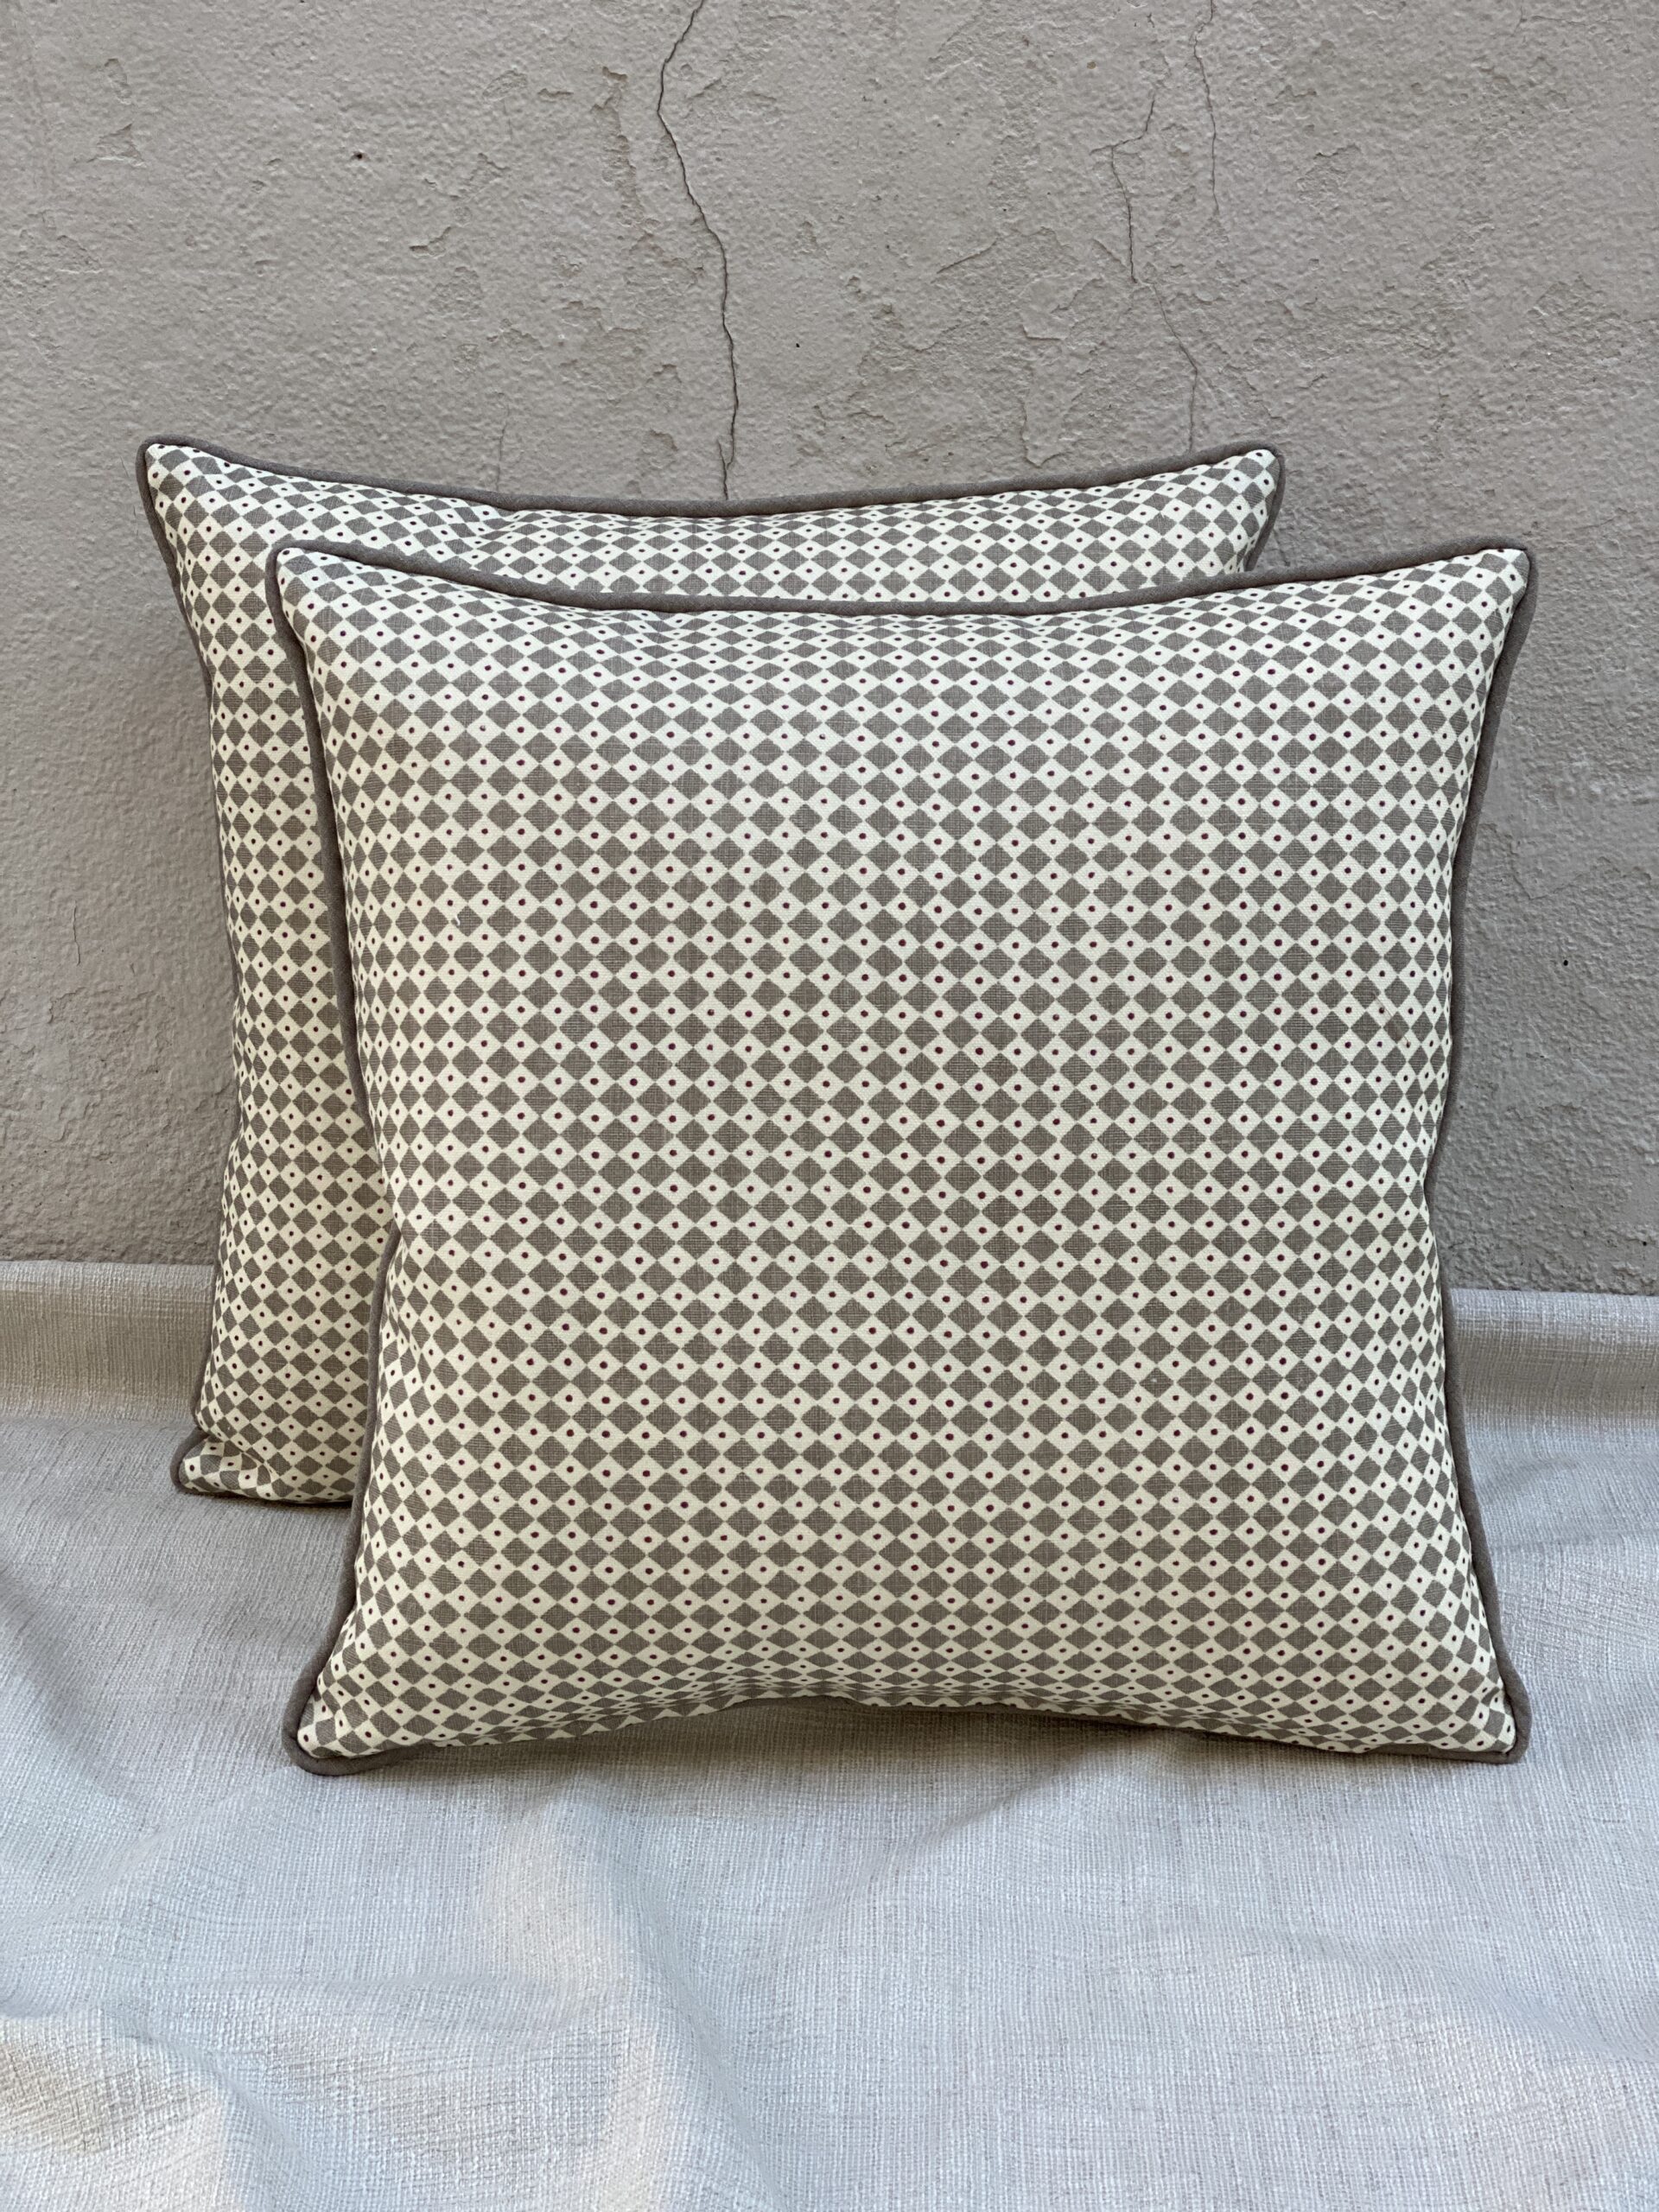 Lewis & Wood Diamond Dot Pillows